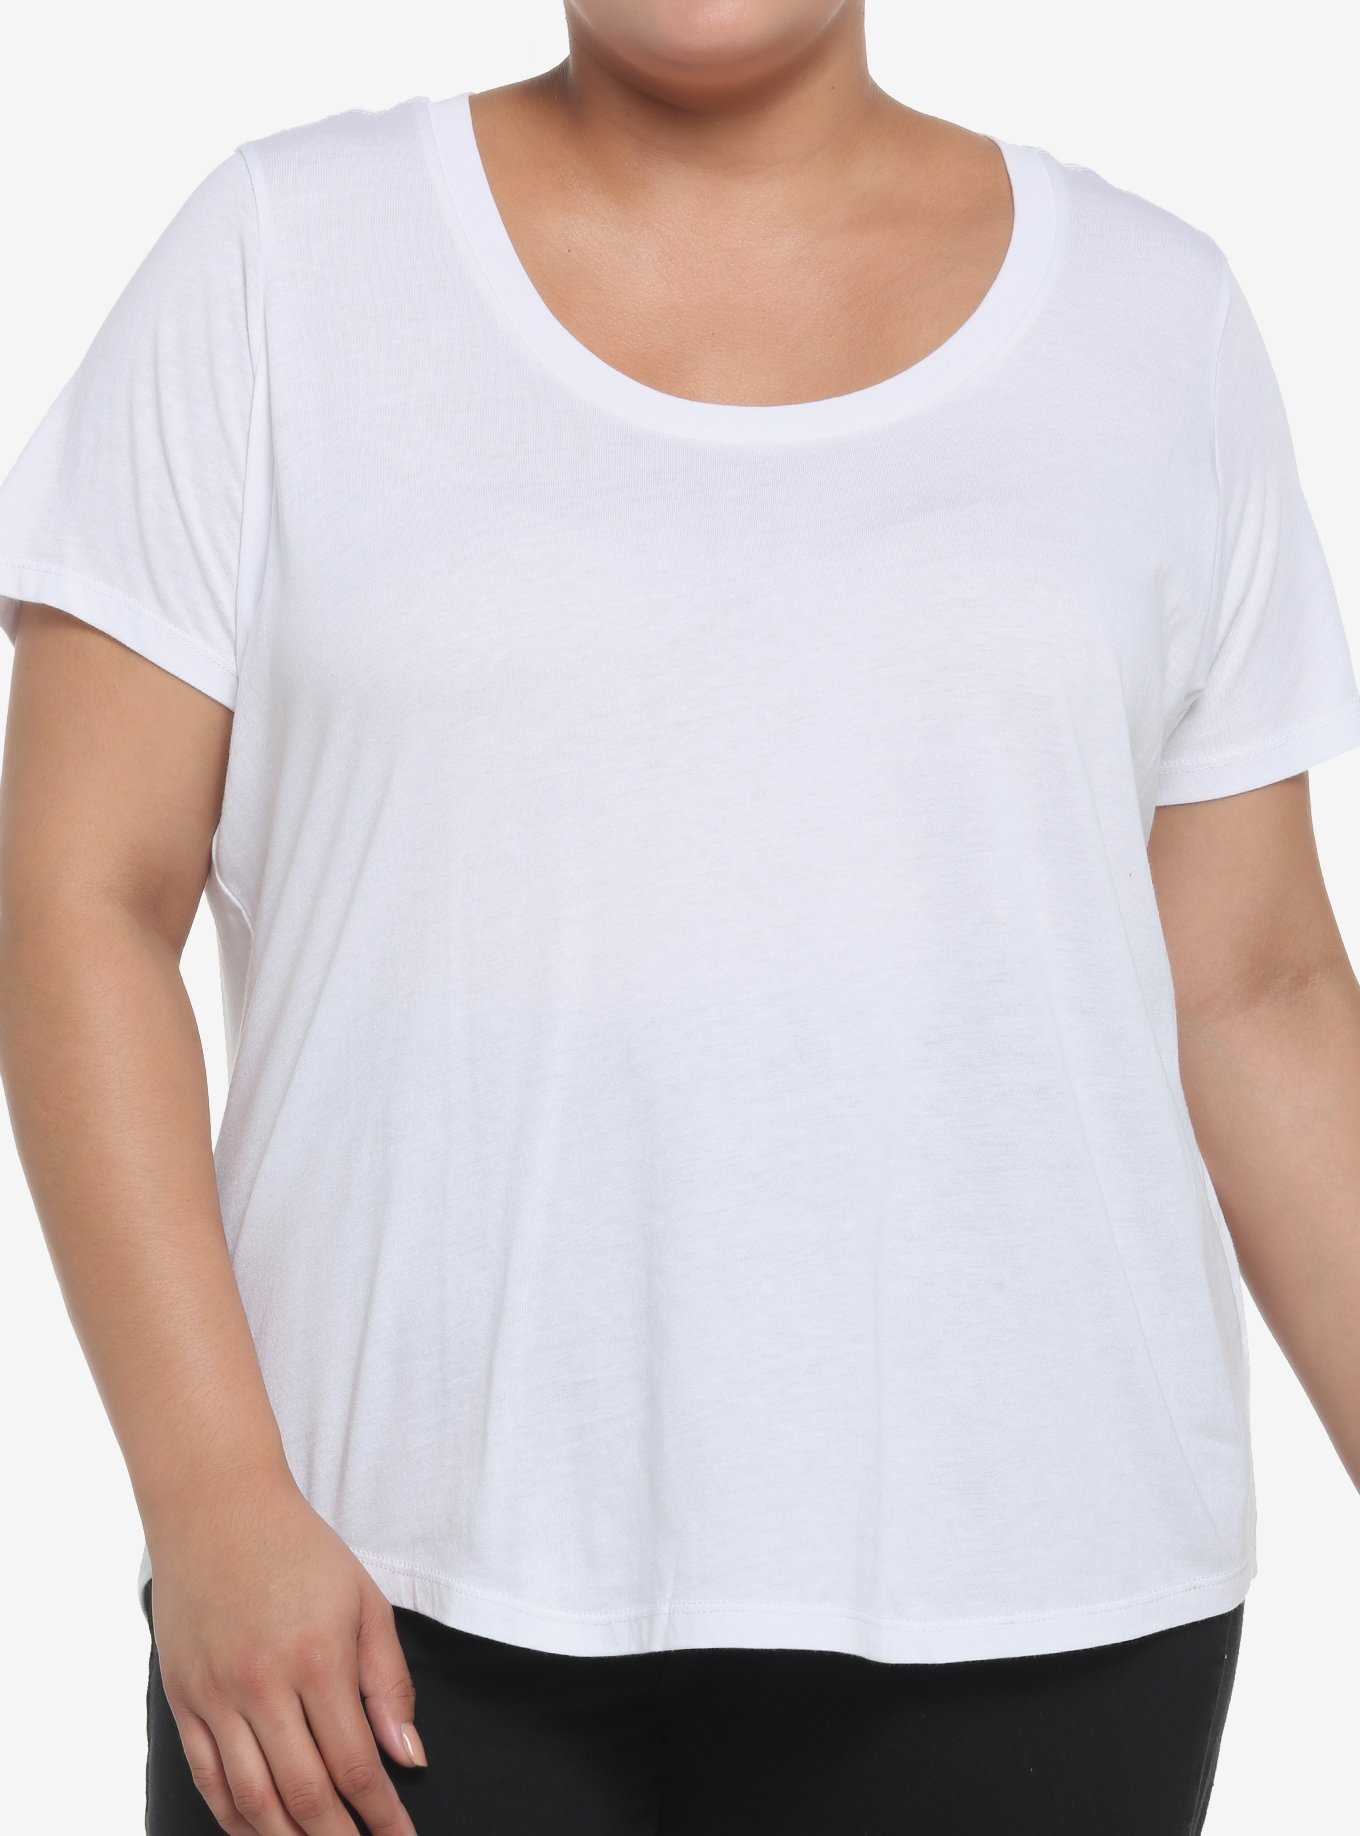 Her Universe White Scoop Neck Favorite T-Shirt Plus Size, , hi-res